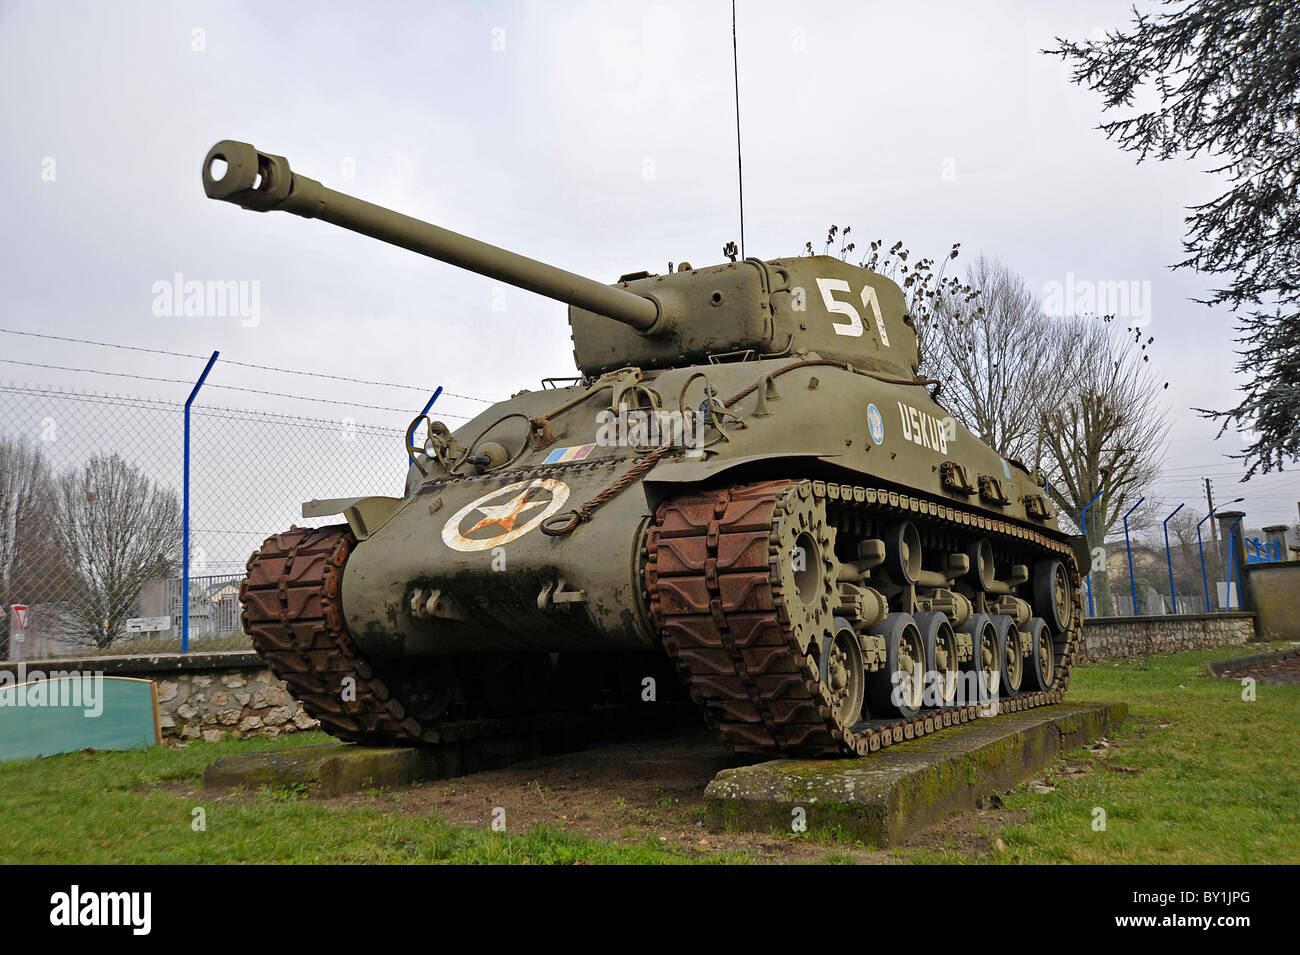 America's M4 Sherman Tank, a WWII War Machine